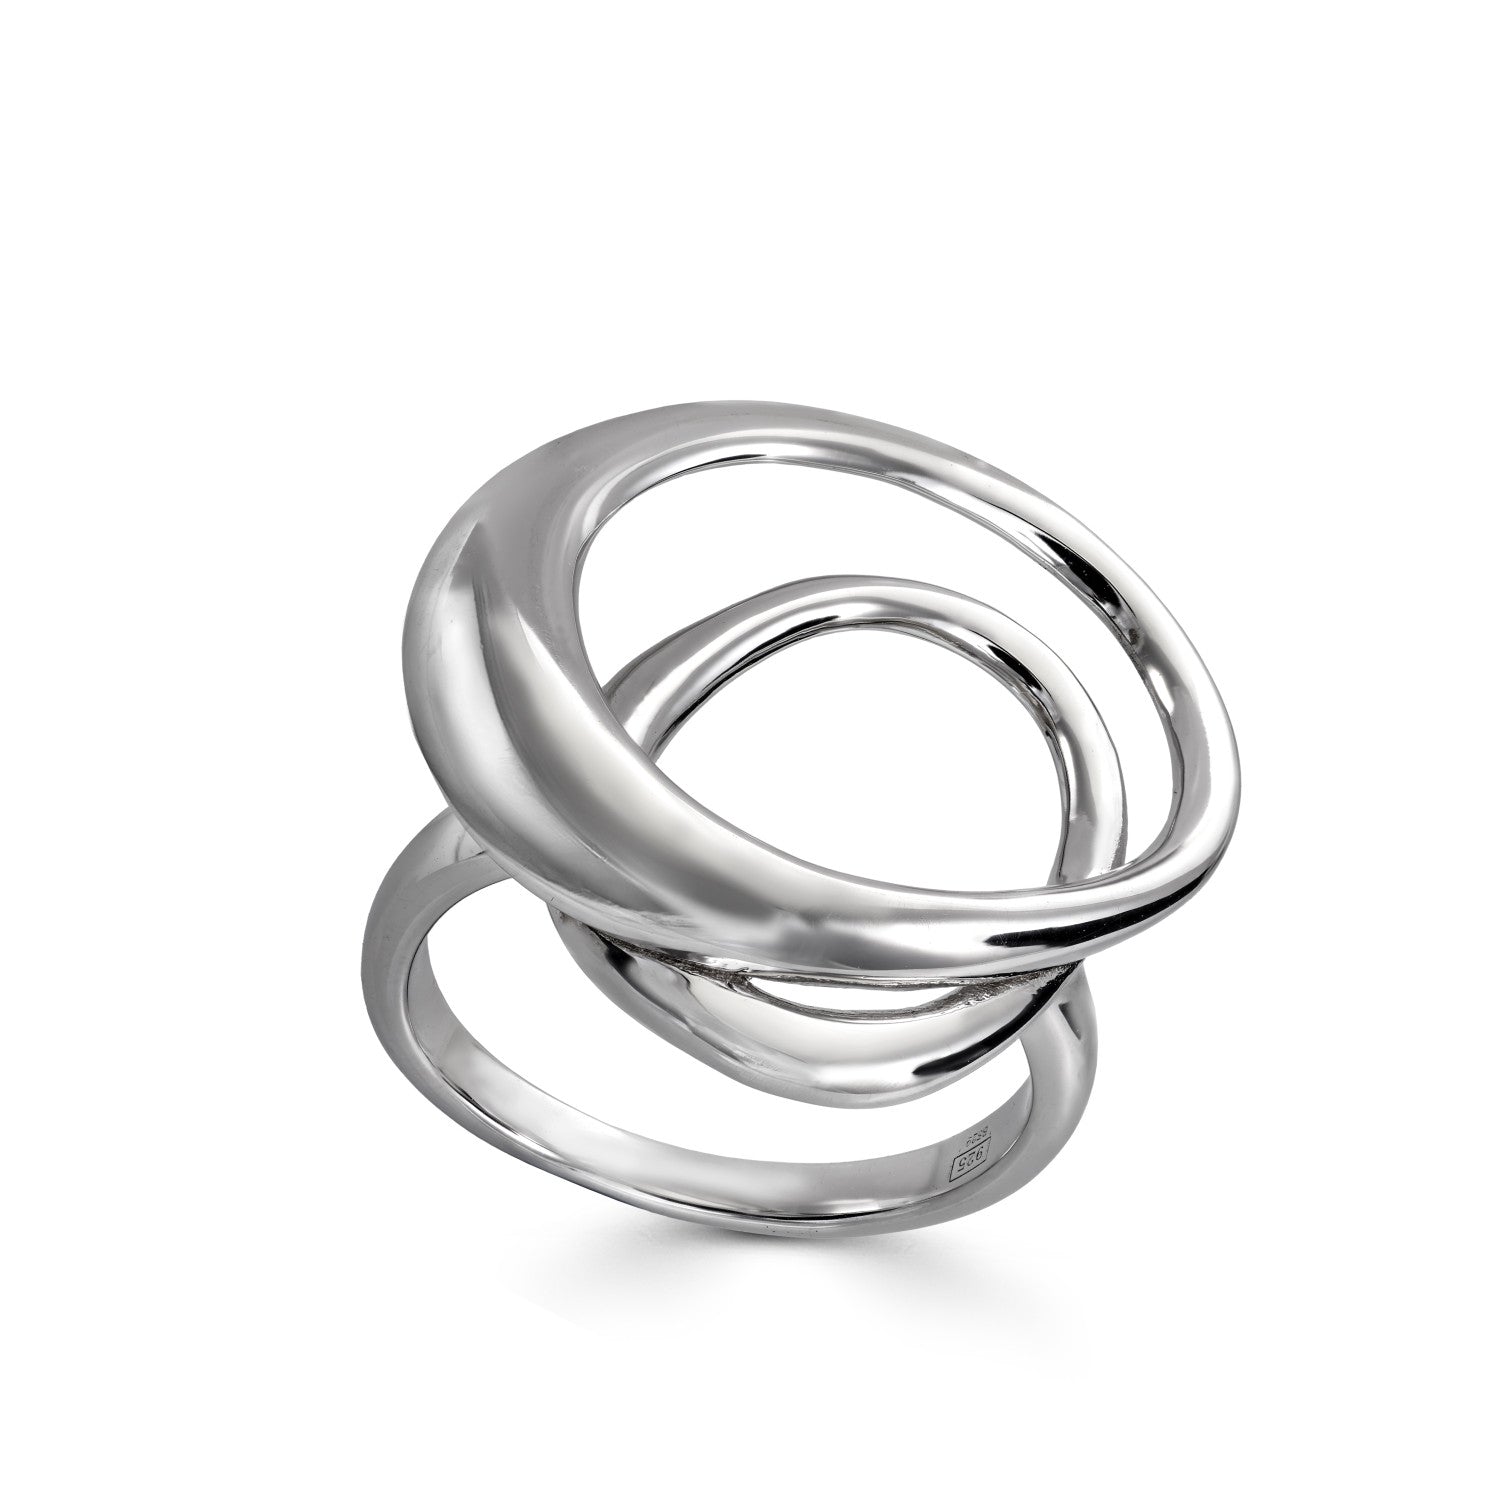 Anillos grandes diseño espiral en plata lisa